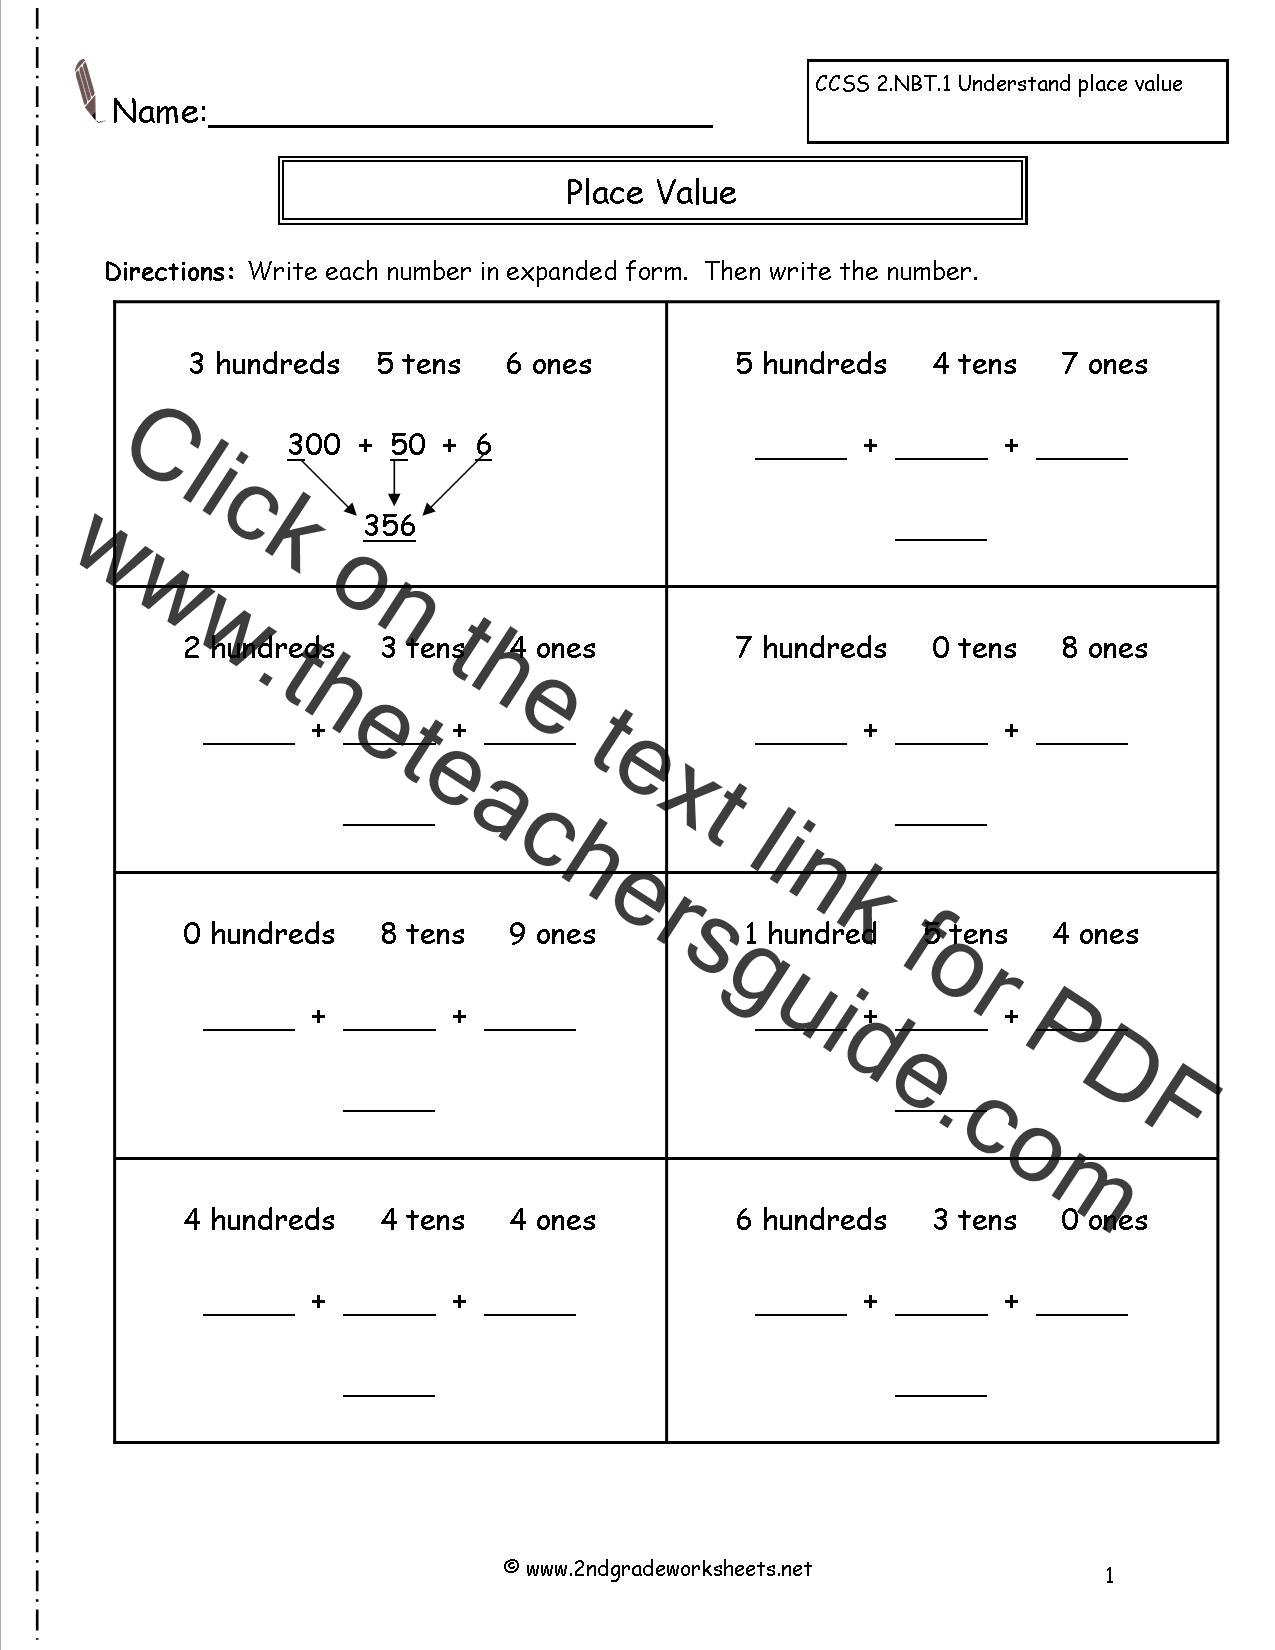 Printable Number Sense and Spelling Worksheets